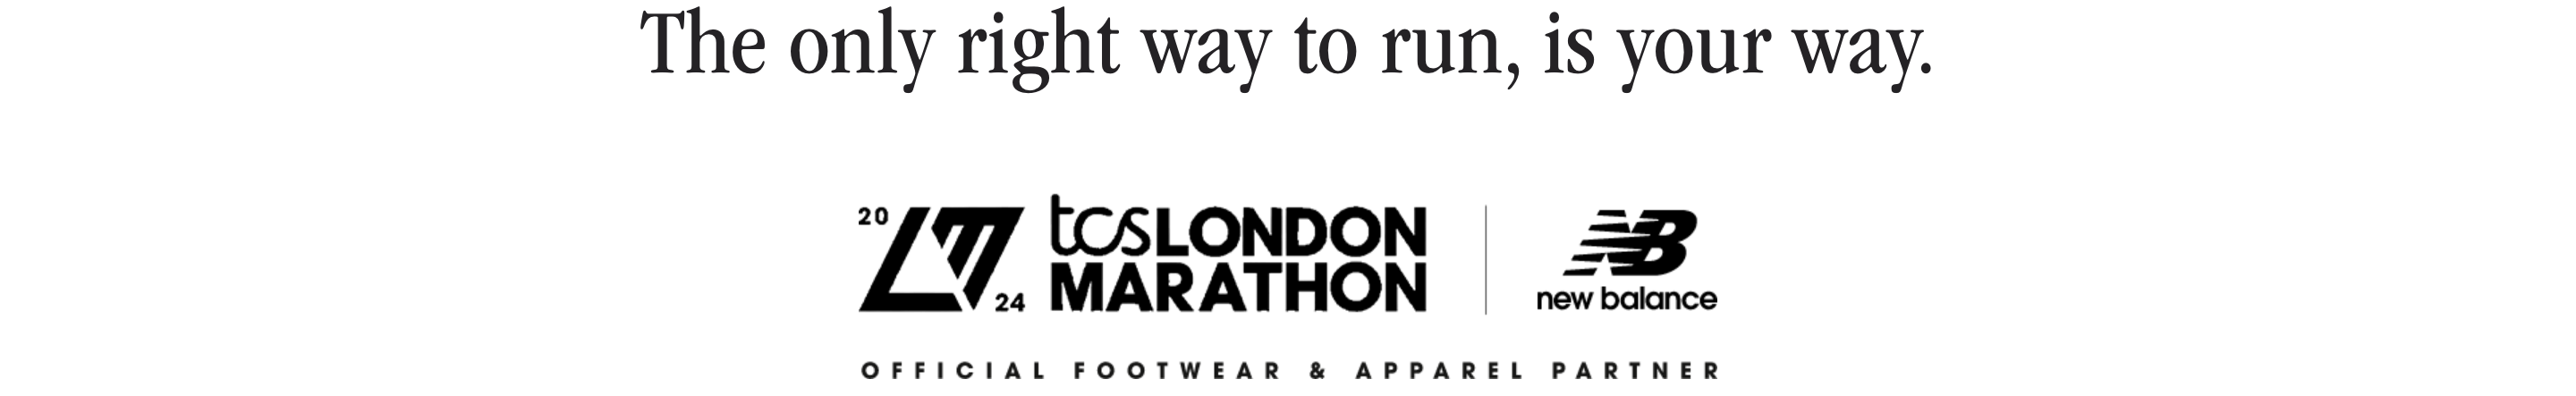 New Balance London Marathon 